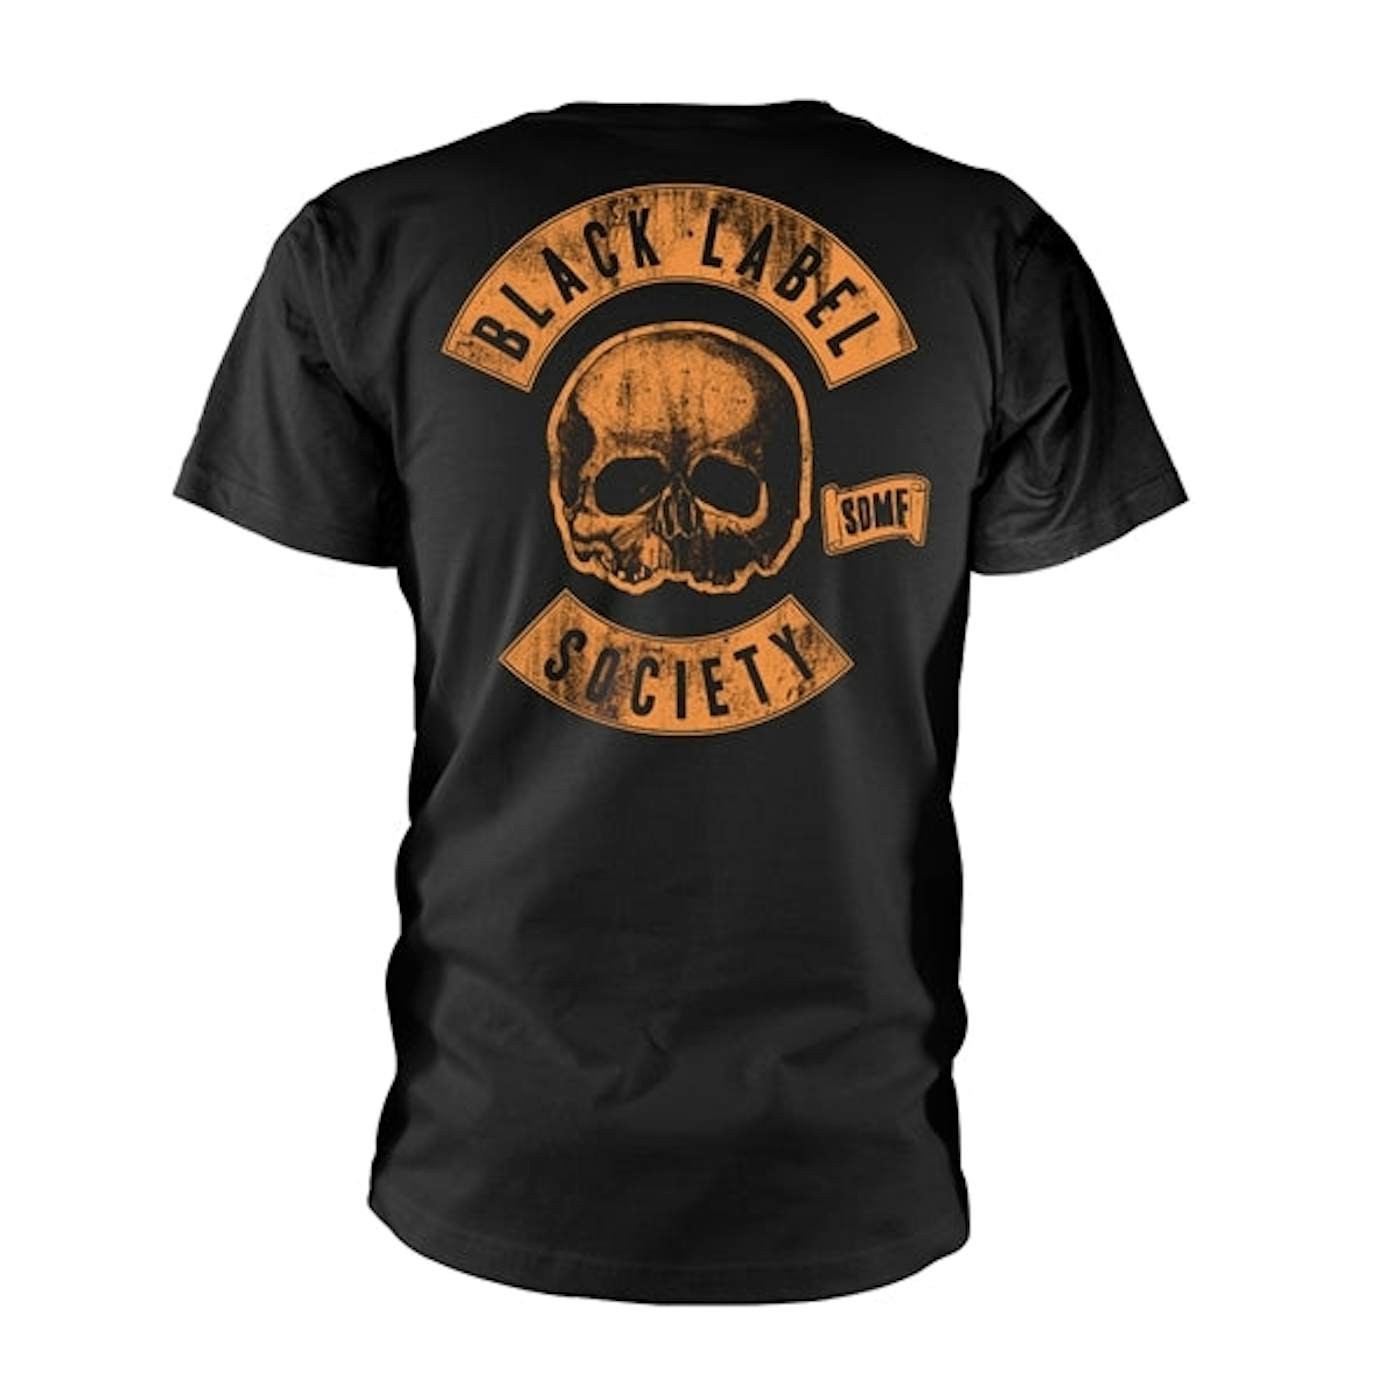 Black Label Society T-Shirt - Hell Riding Worldwide